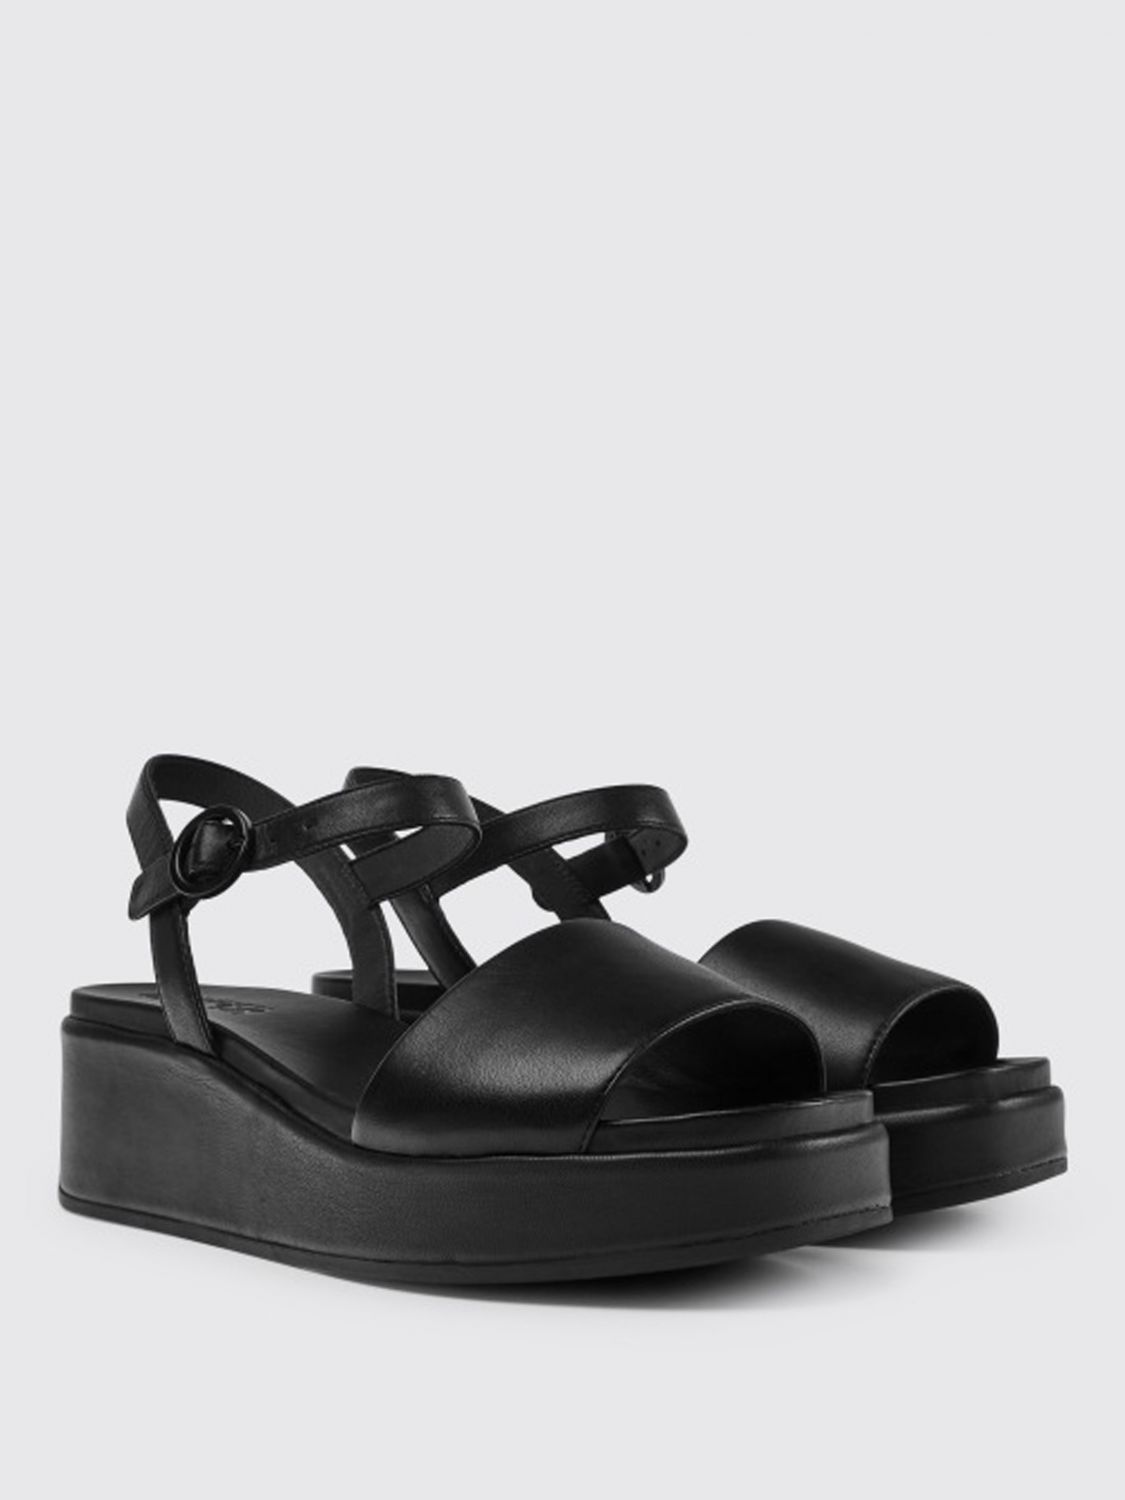 Chaussures compensées Camper: Sandales plates femme Camper noir 2